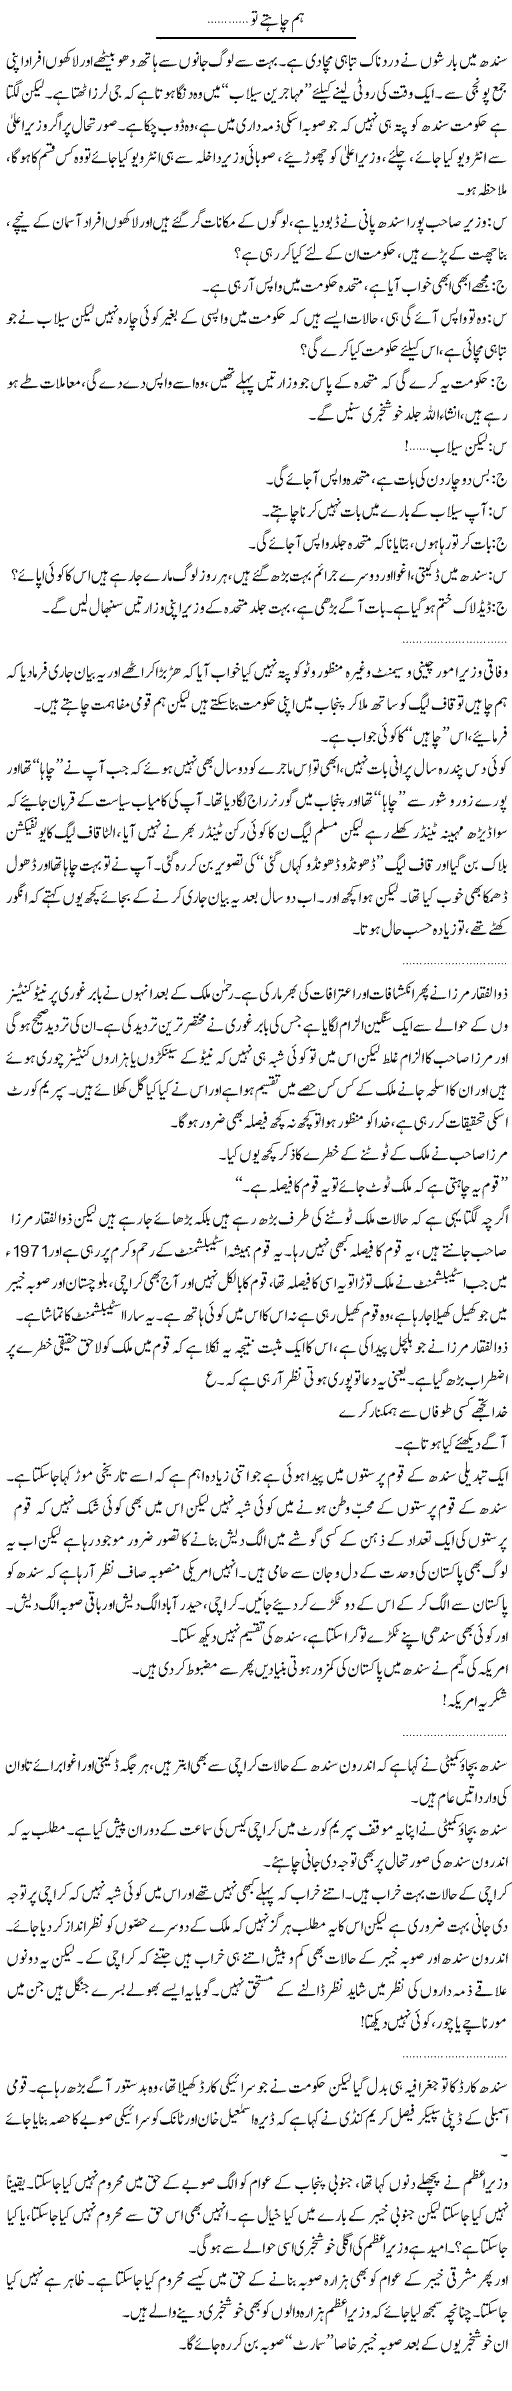 Sindh Floods Express Column Abdullah Tariq 7 September 2011